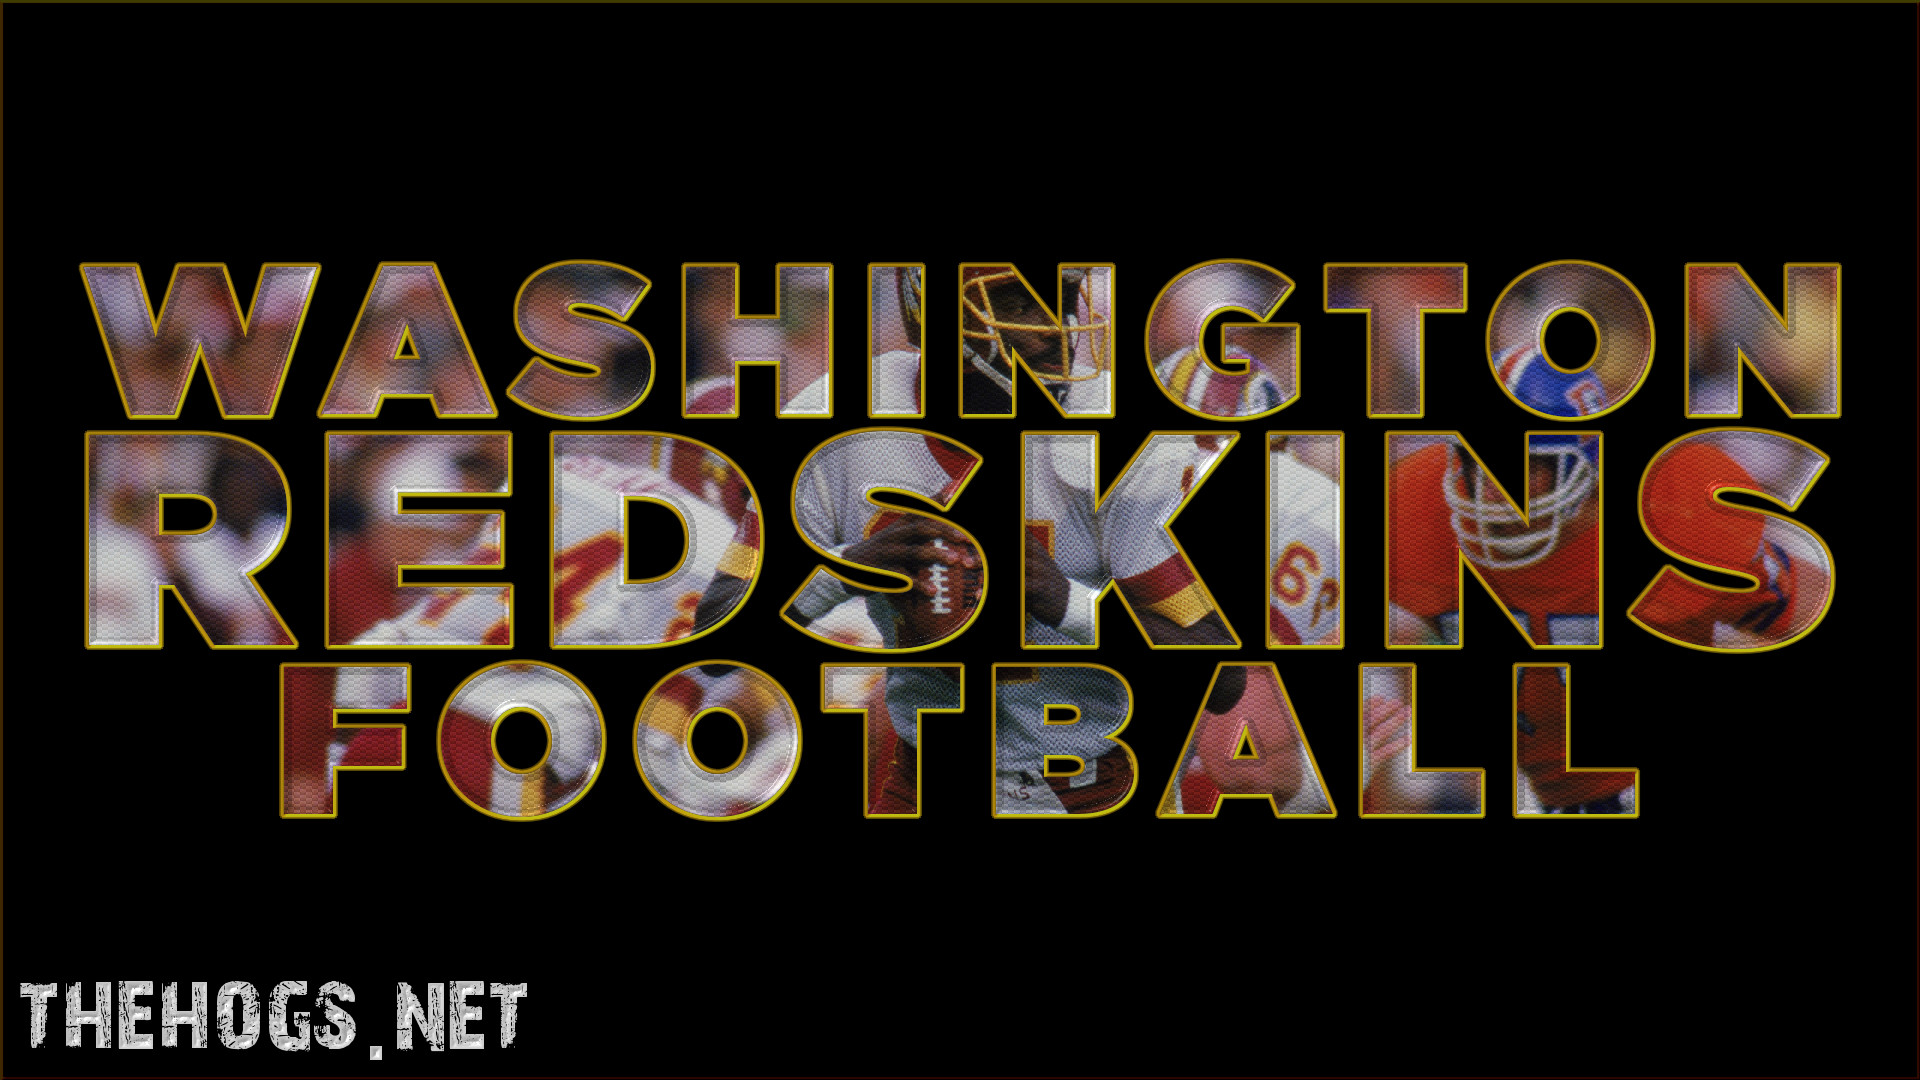 1920x1080 Washington Redskins Football